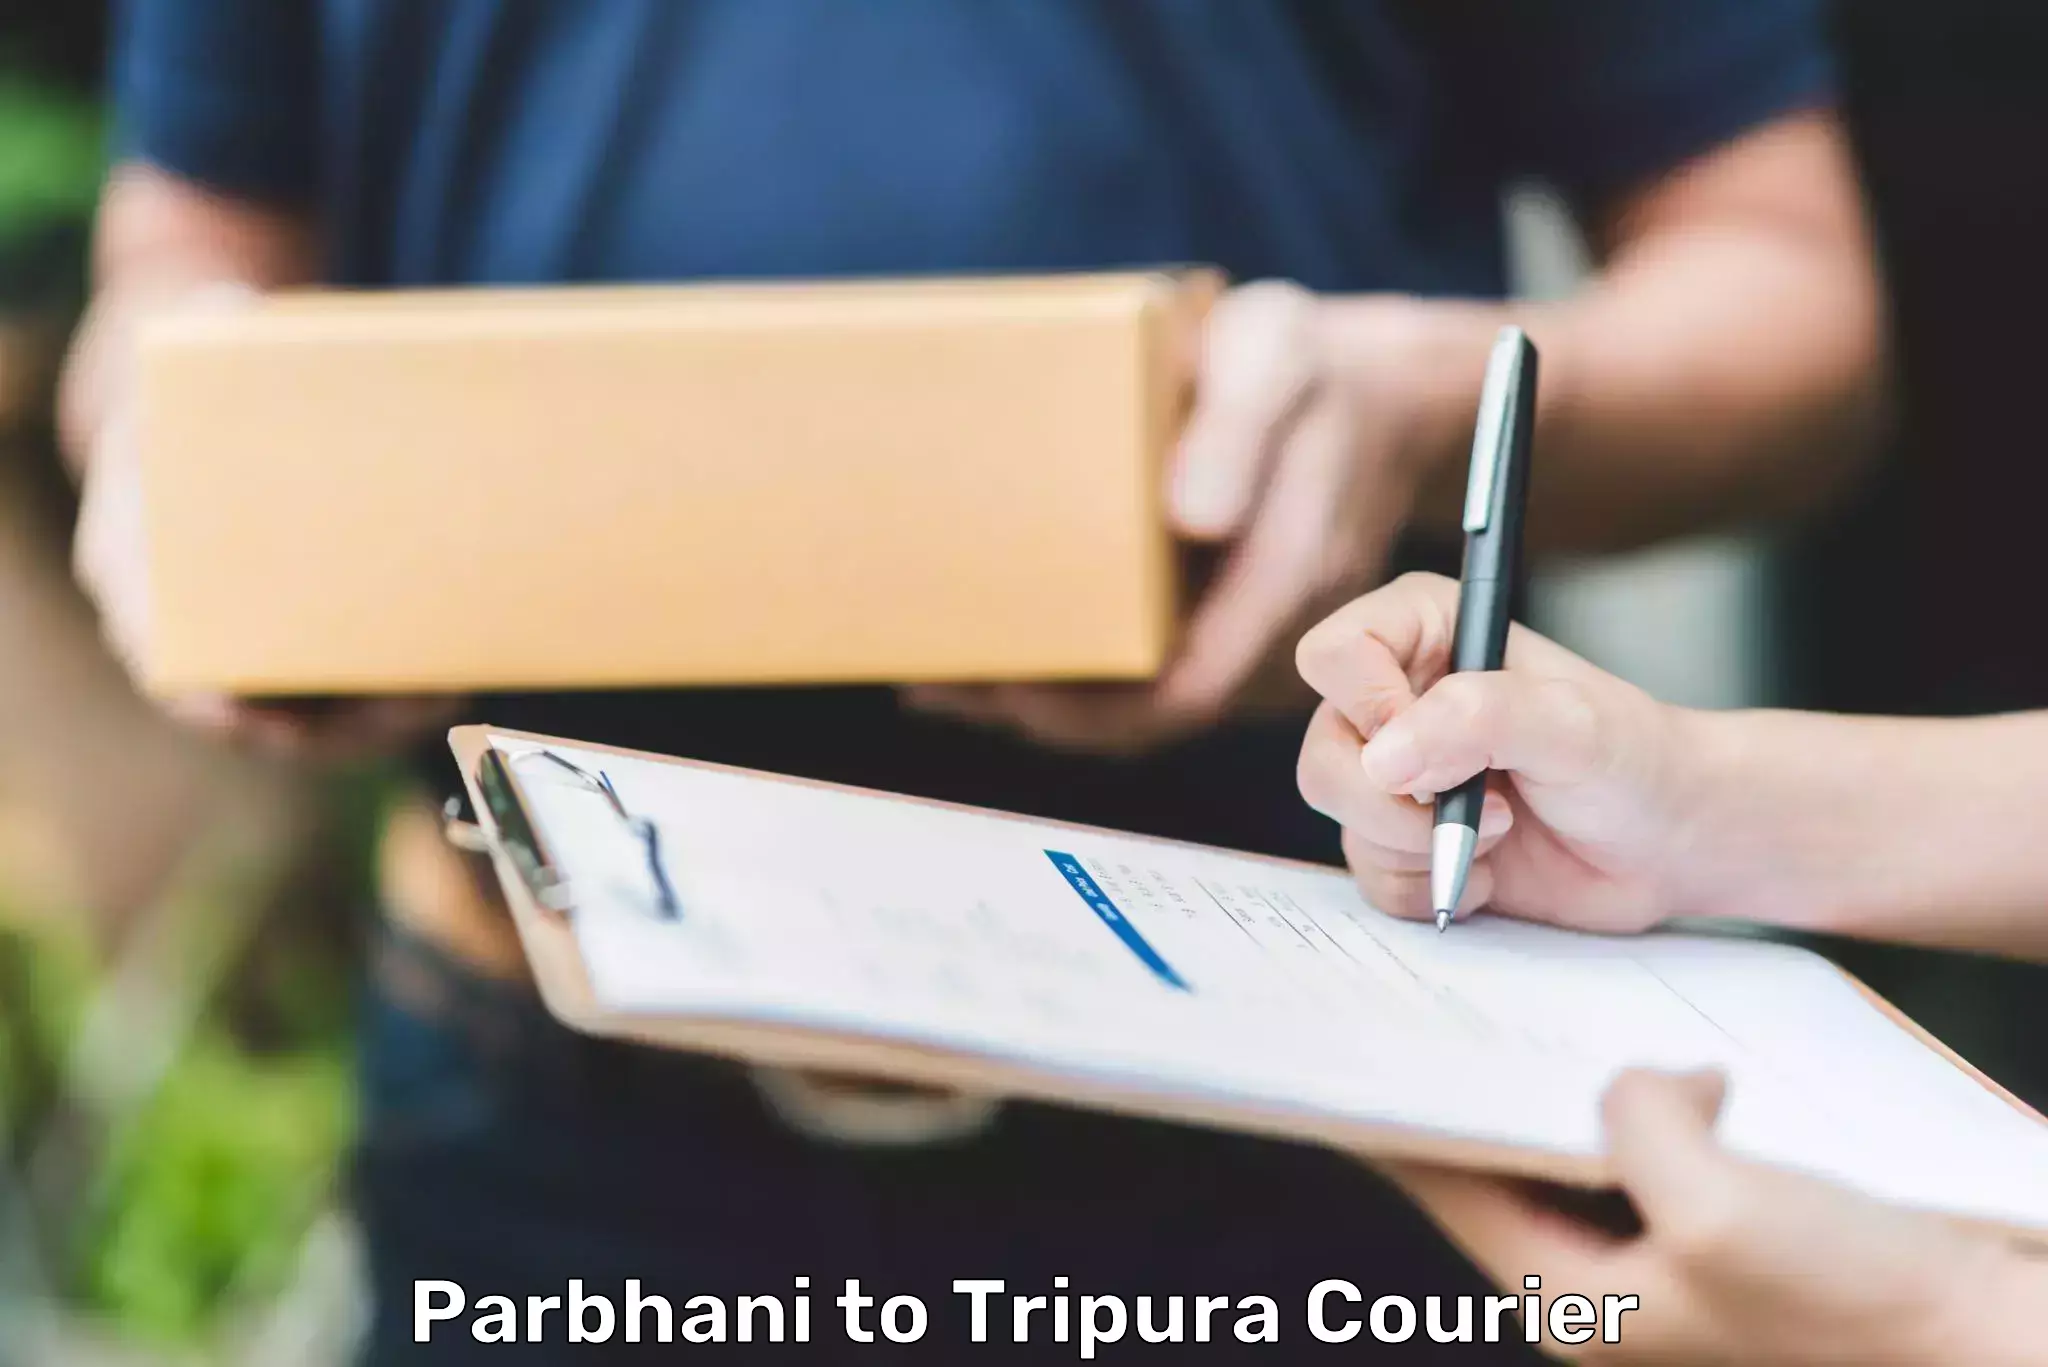 Global logistics network Parbhani to Tripura